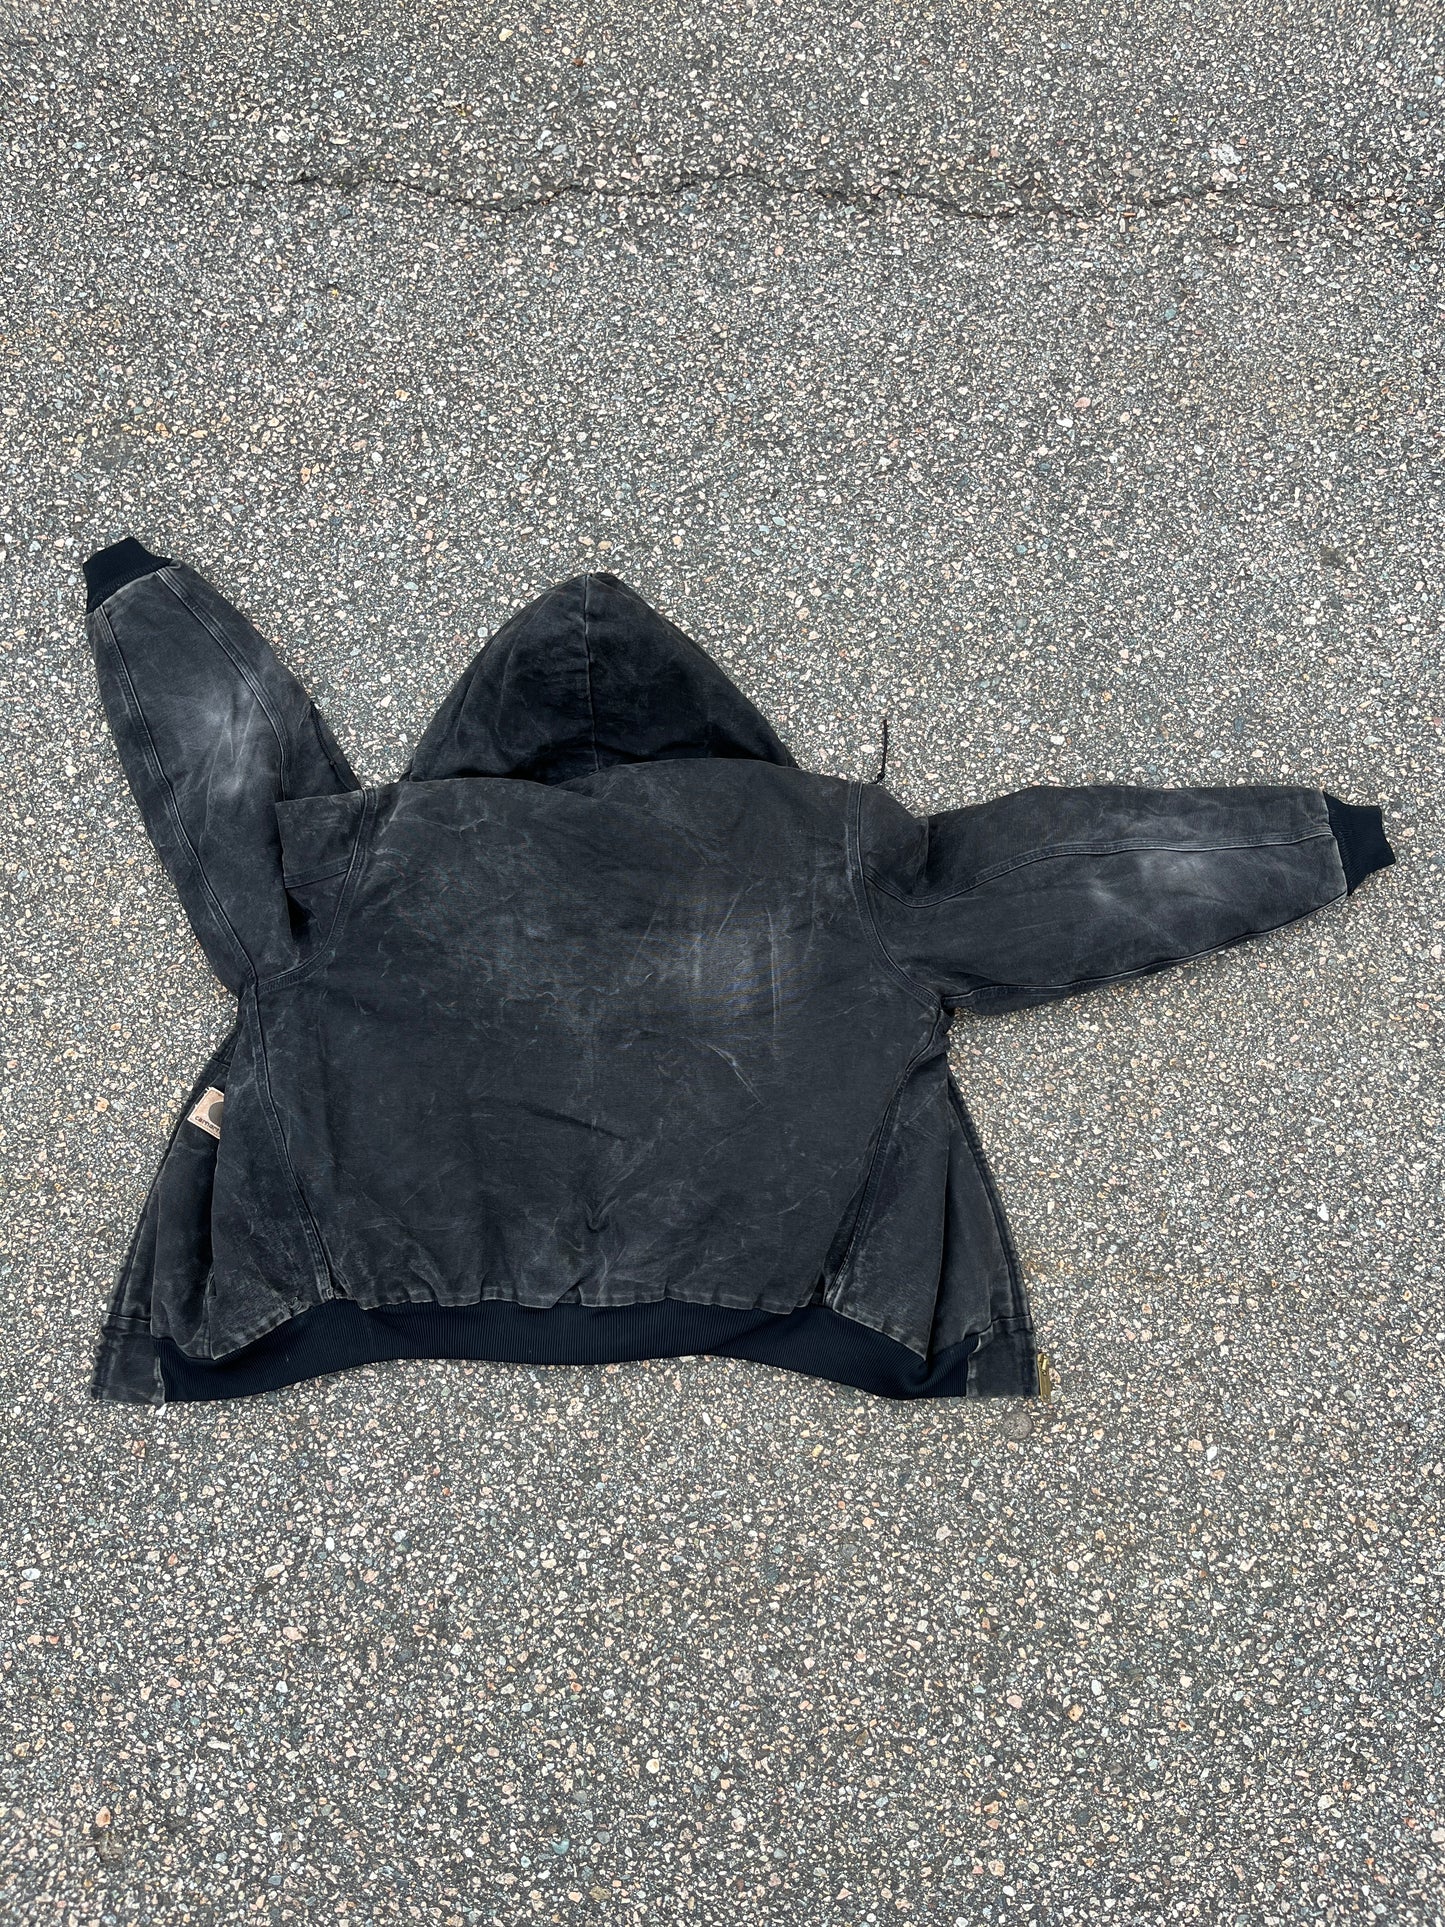 Faded Onyx Black Carhartt Active Jacket - Large